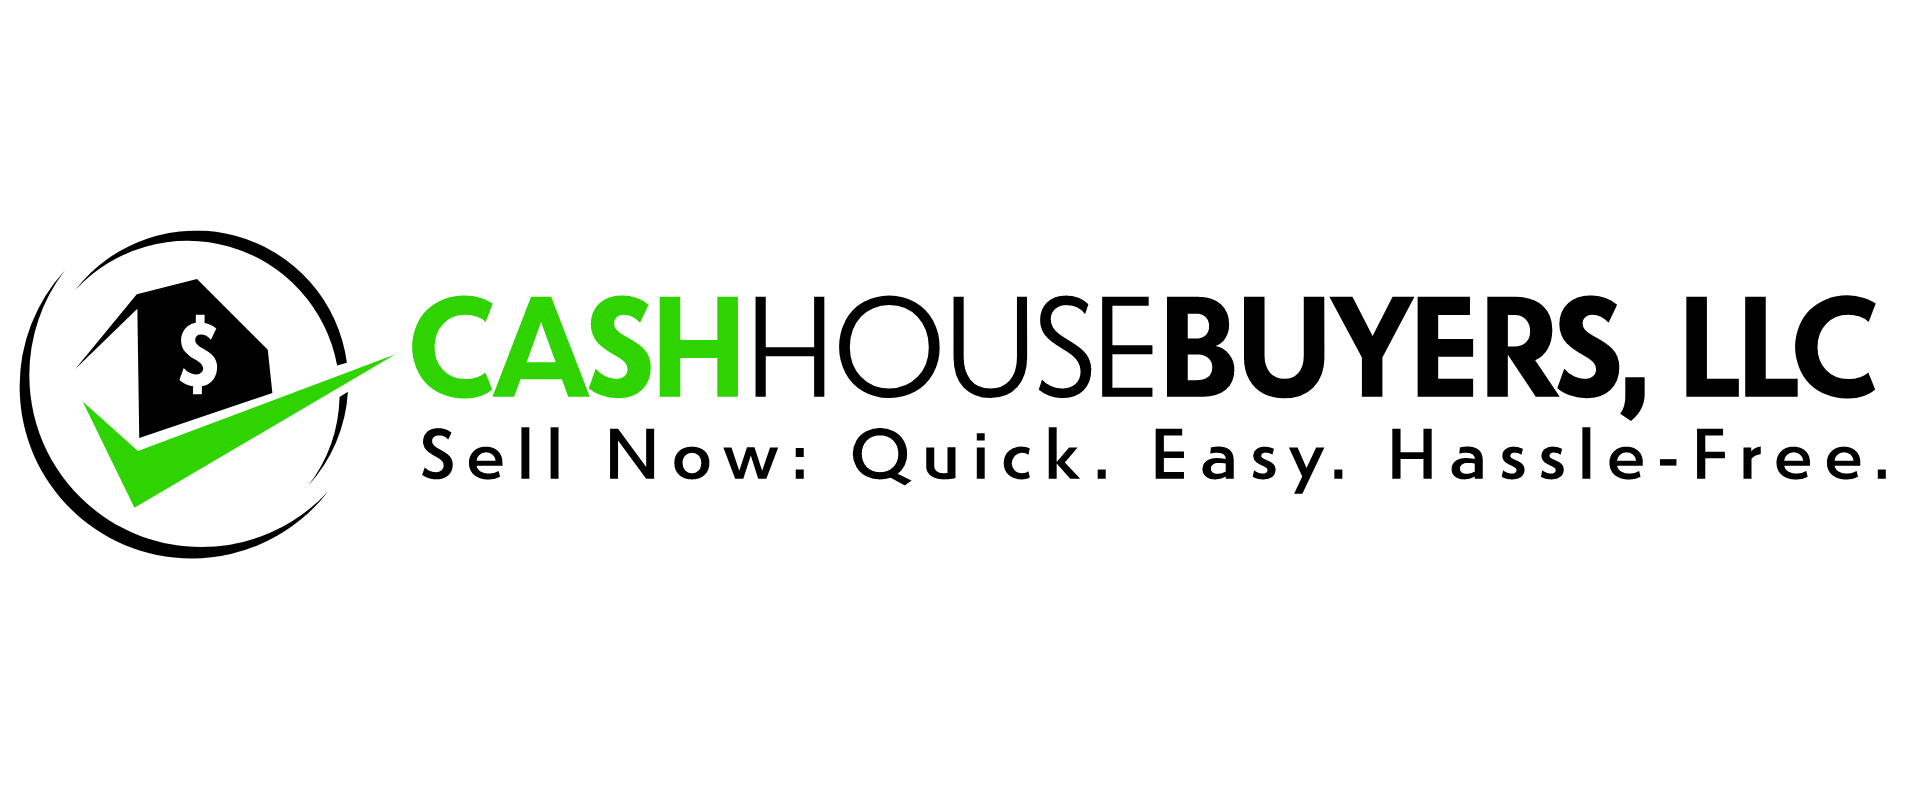 Cash House Buyers, LLC logo